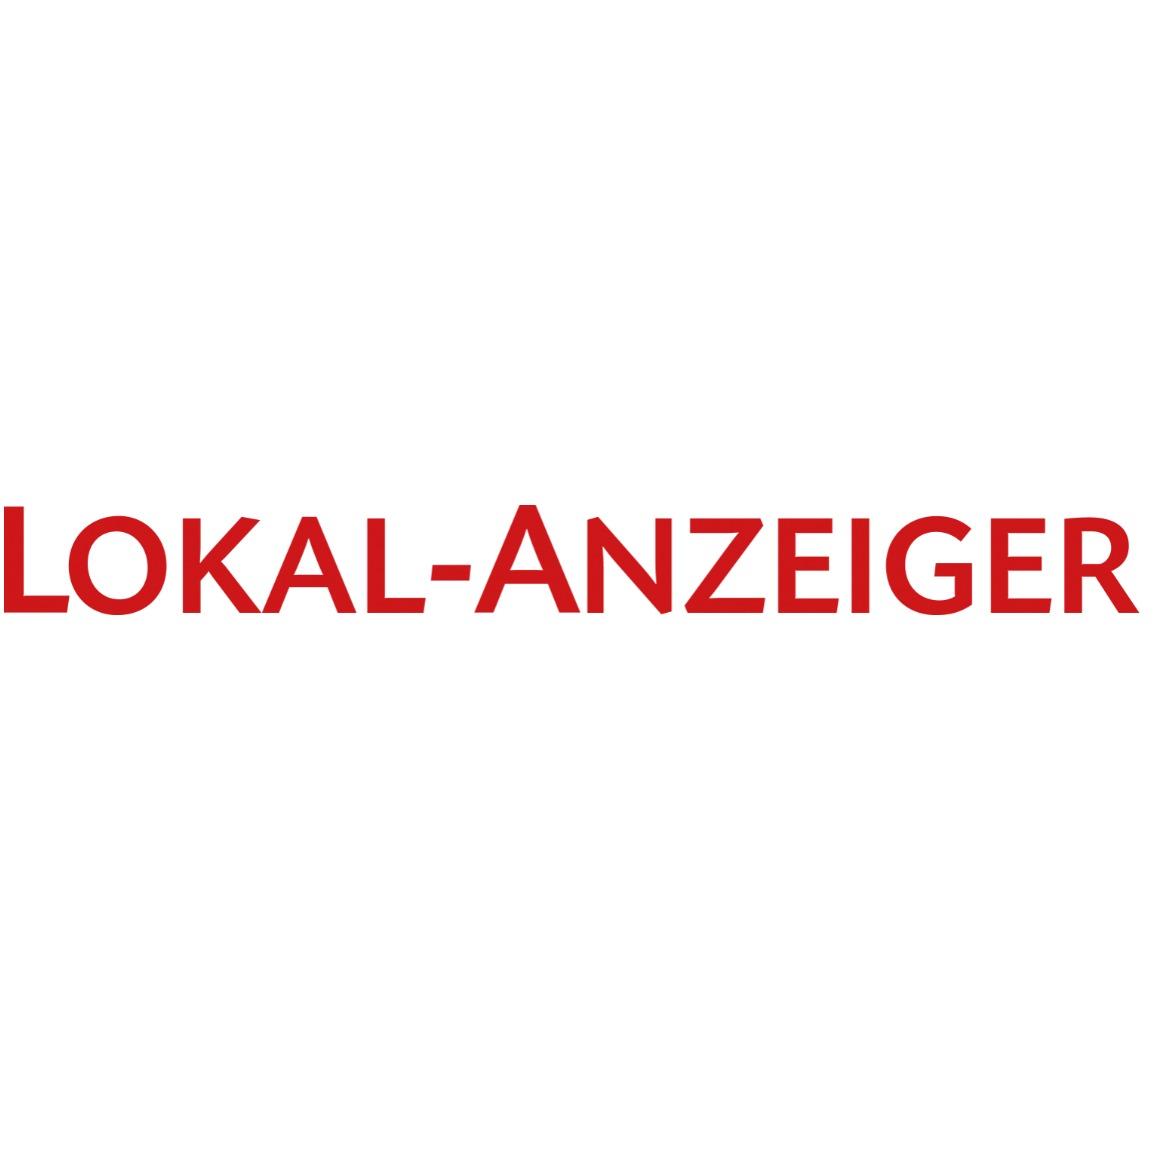 Lokalanzeiger in Gummersbach - Logo